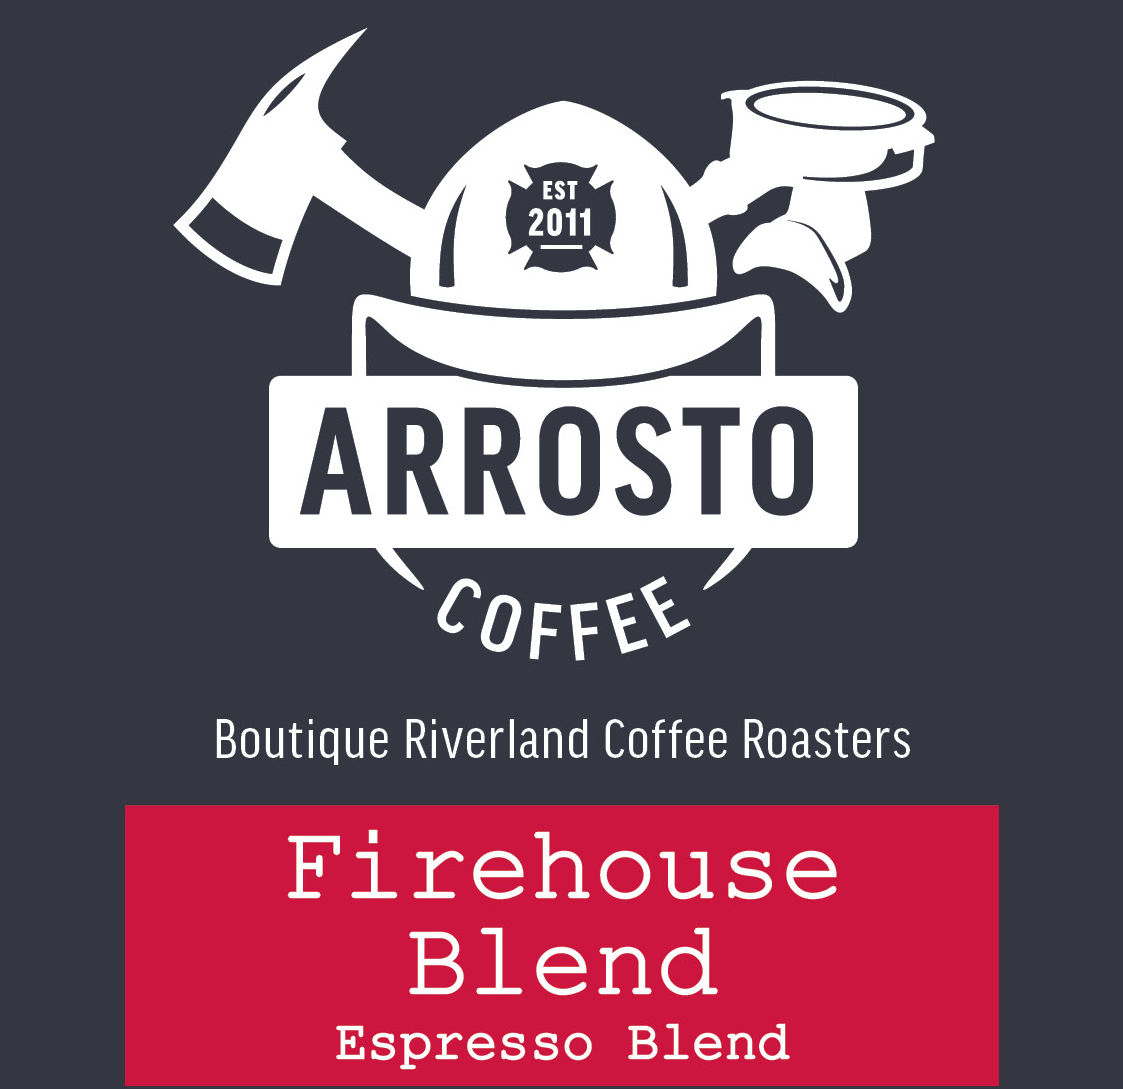 Arrosto Coffee - Firehouse Blend - 250g / Beans